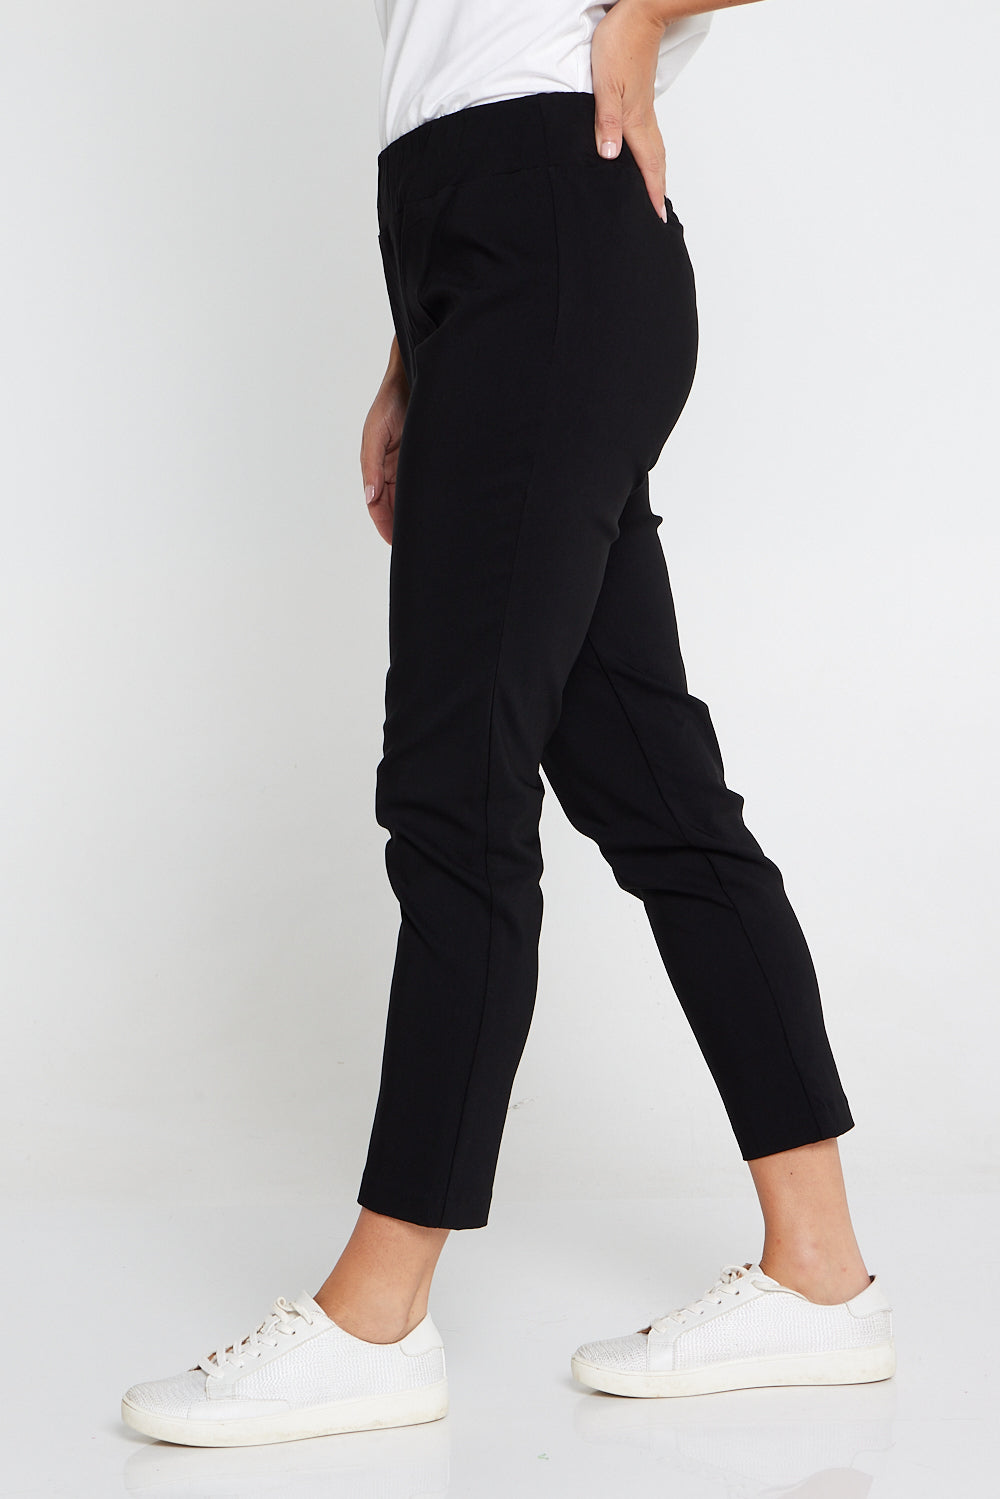 Moira Bengaline Pants - Black – TULIO Fashion